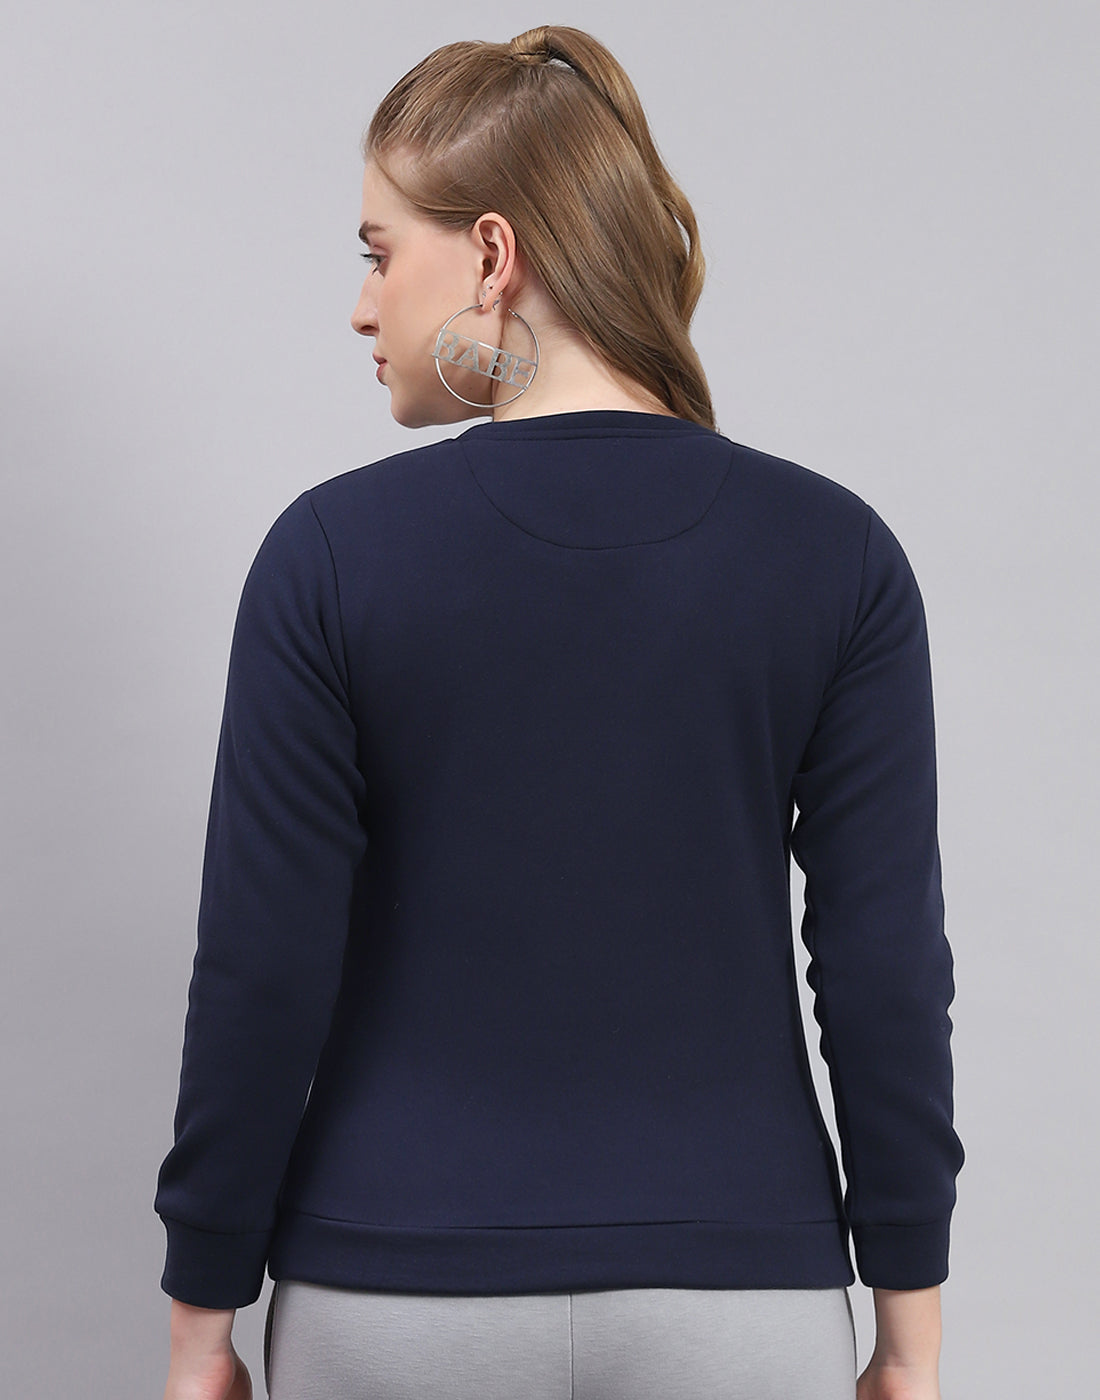 Women Navy Blue Printed Round Neck Full Sleeve Sweatshirt